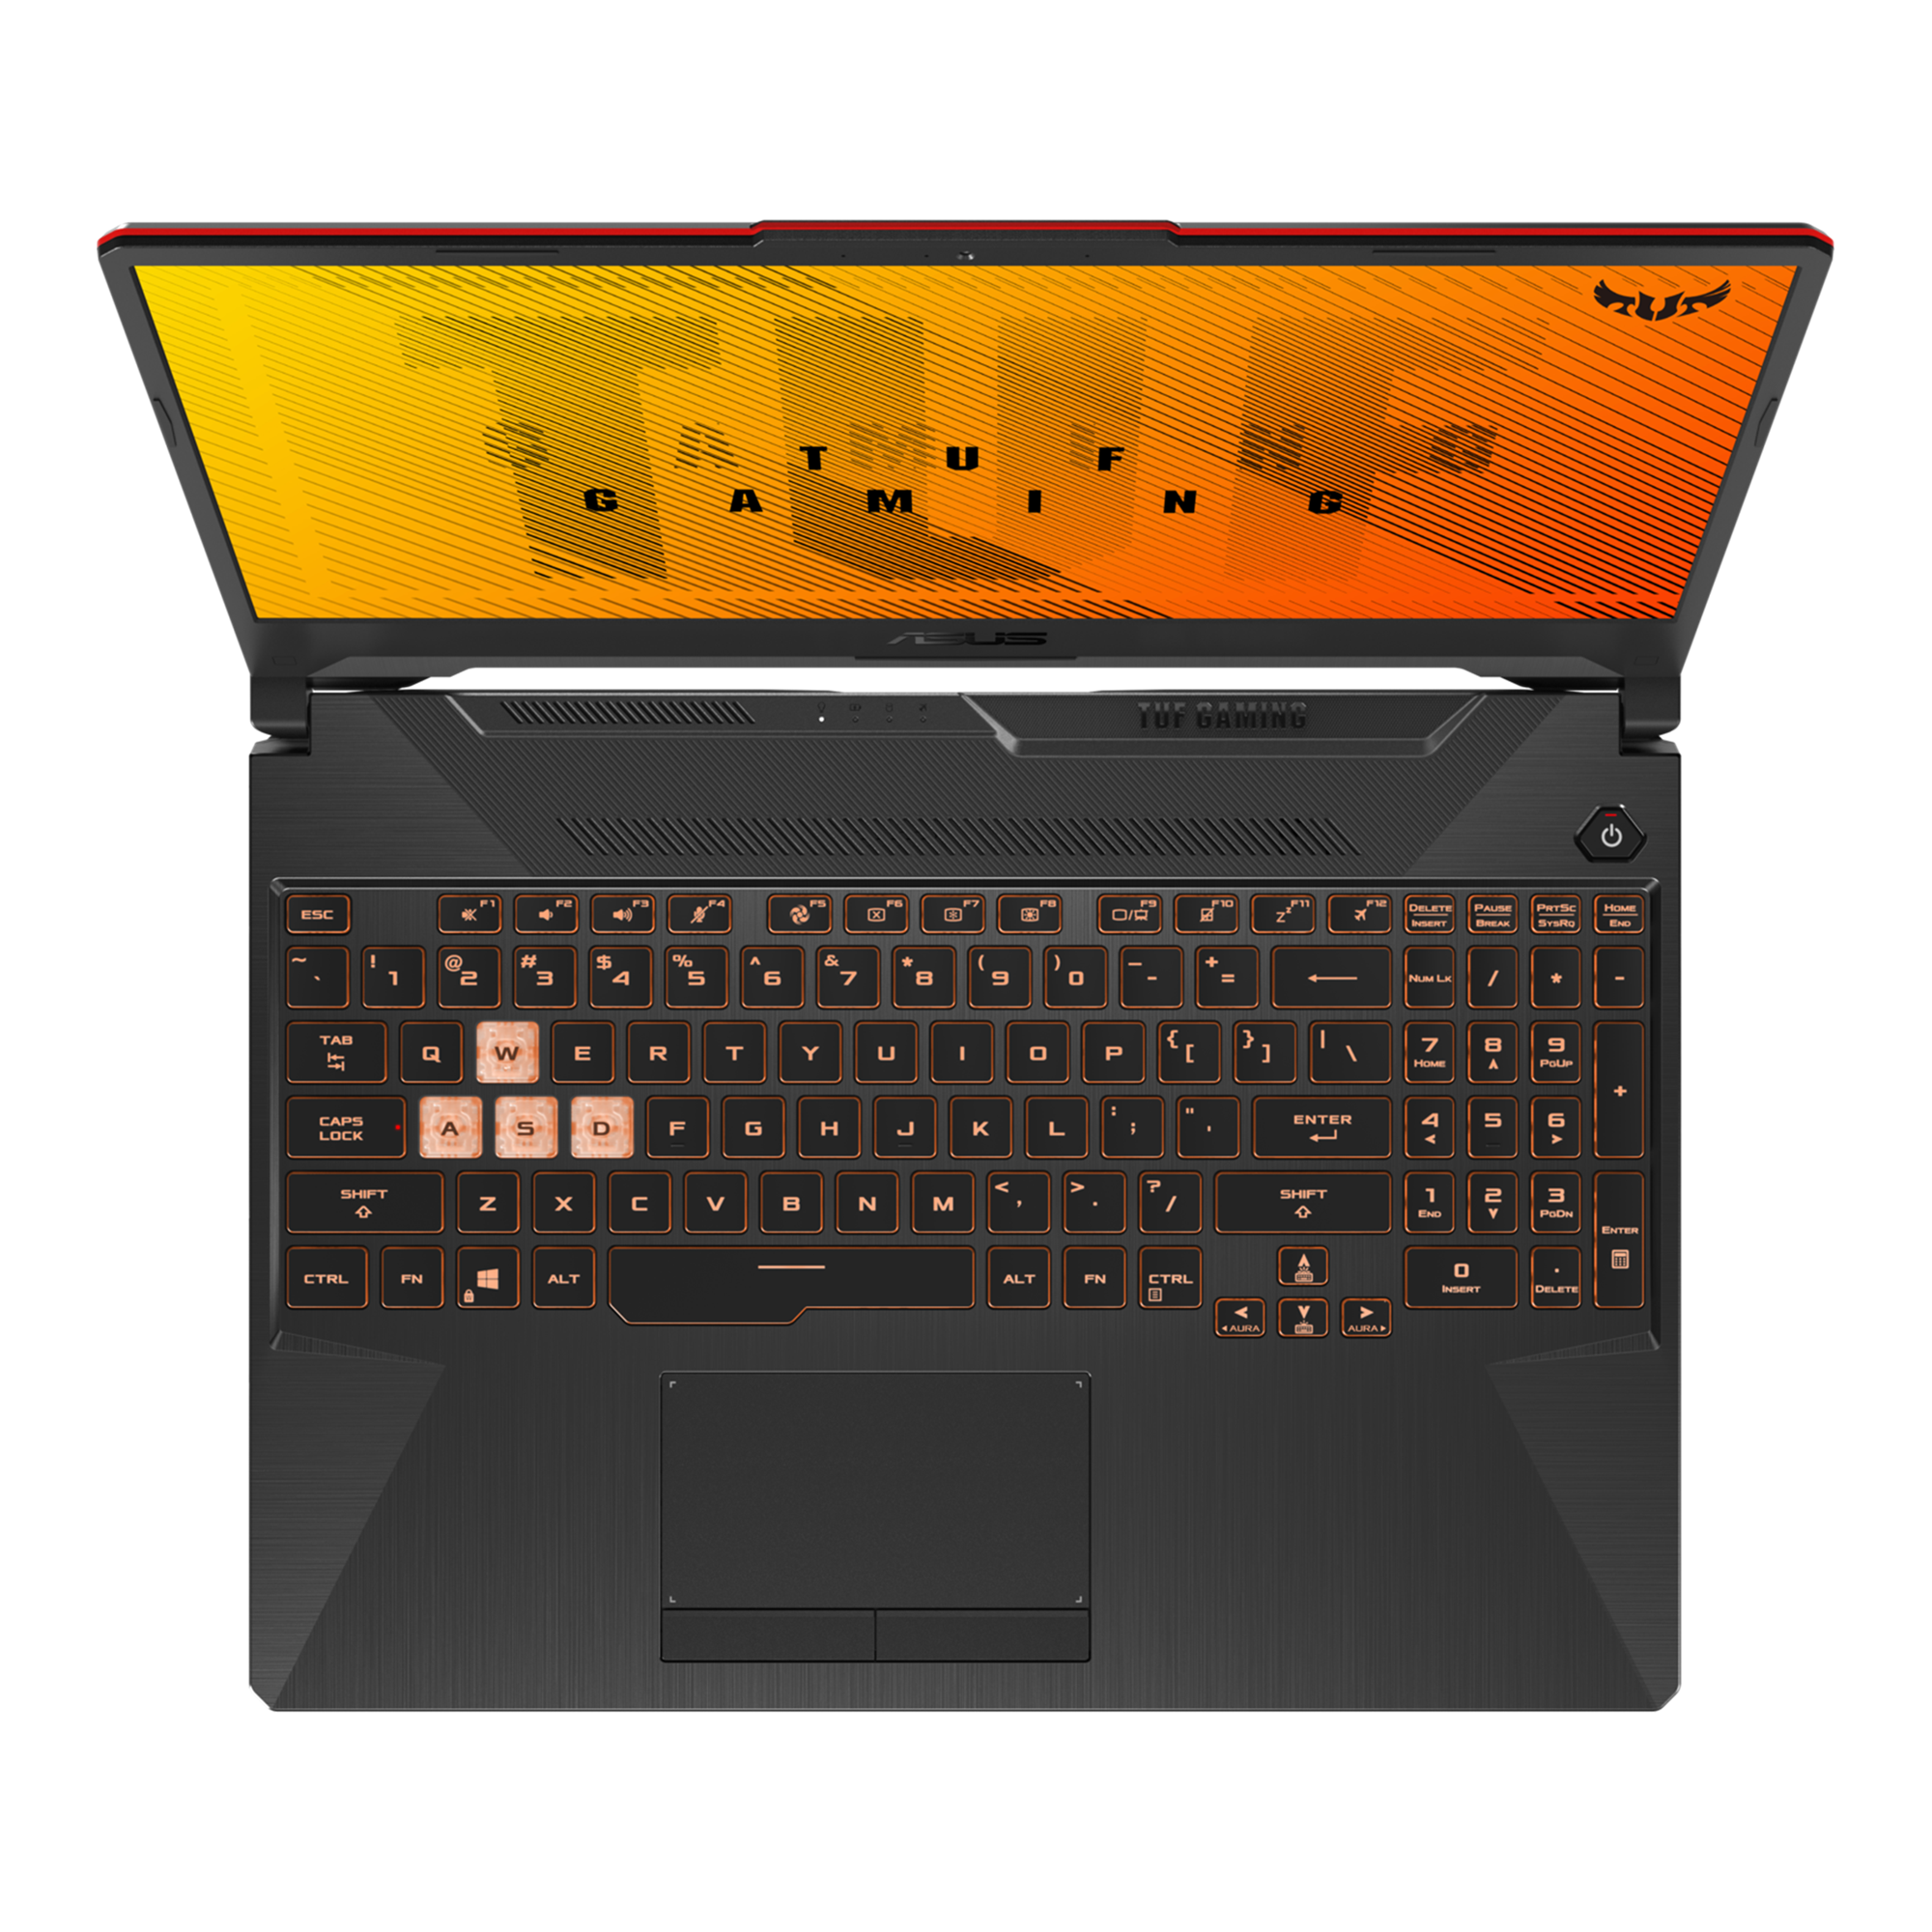 ASUS TUF Gaming F15 Gaming Laptop 15.6 FHD 144Hz 3ms Response Time Display  11th Gen Intel Octa-Core i7-11800H 32GB DDR4 512GB SSD GeForce RTX 3050 4GB  Backlit Keyboard HDMI USB-C WiFi6 Win10